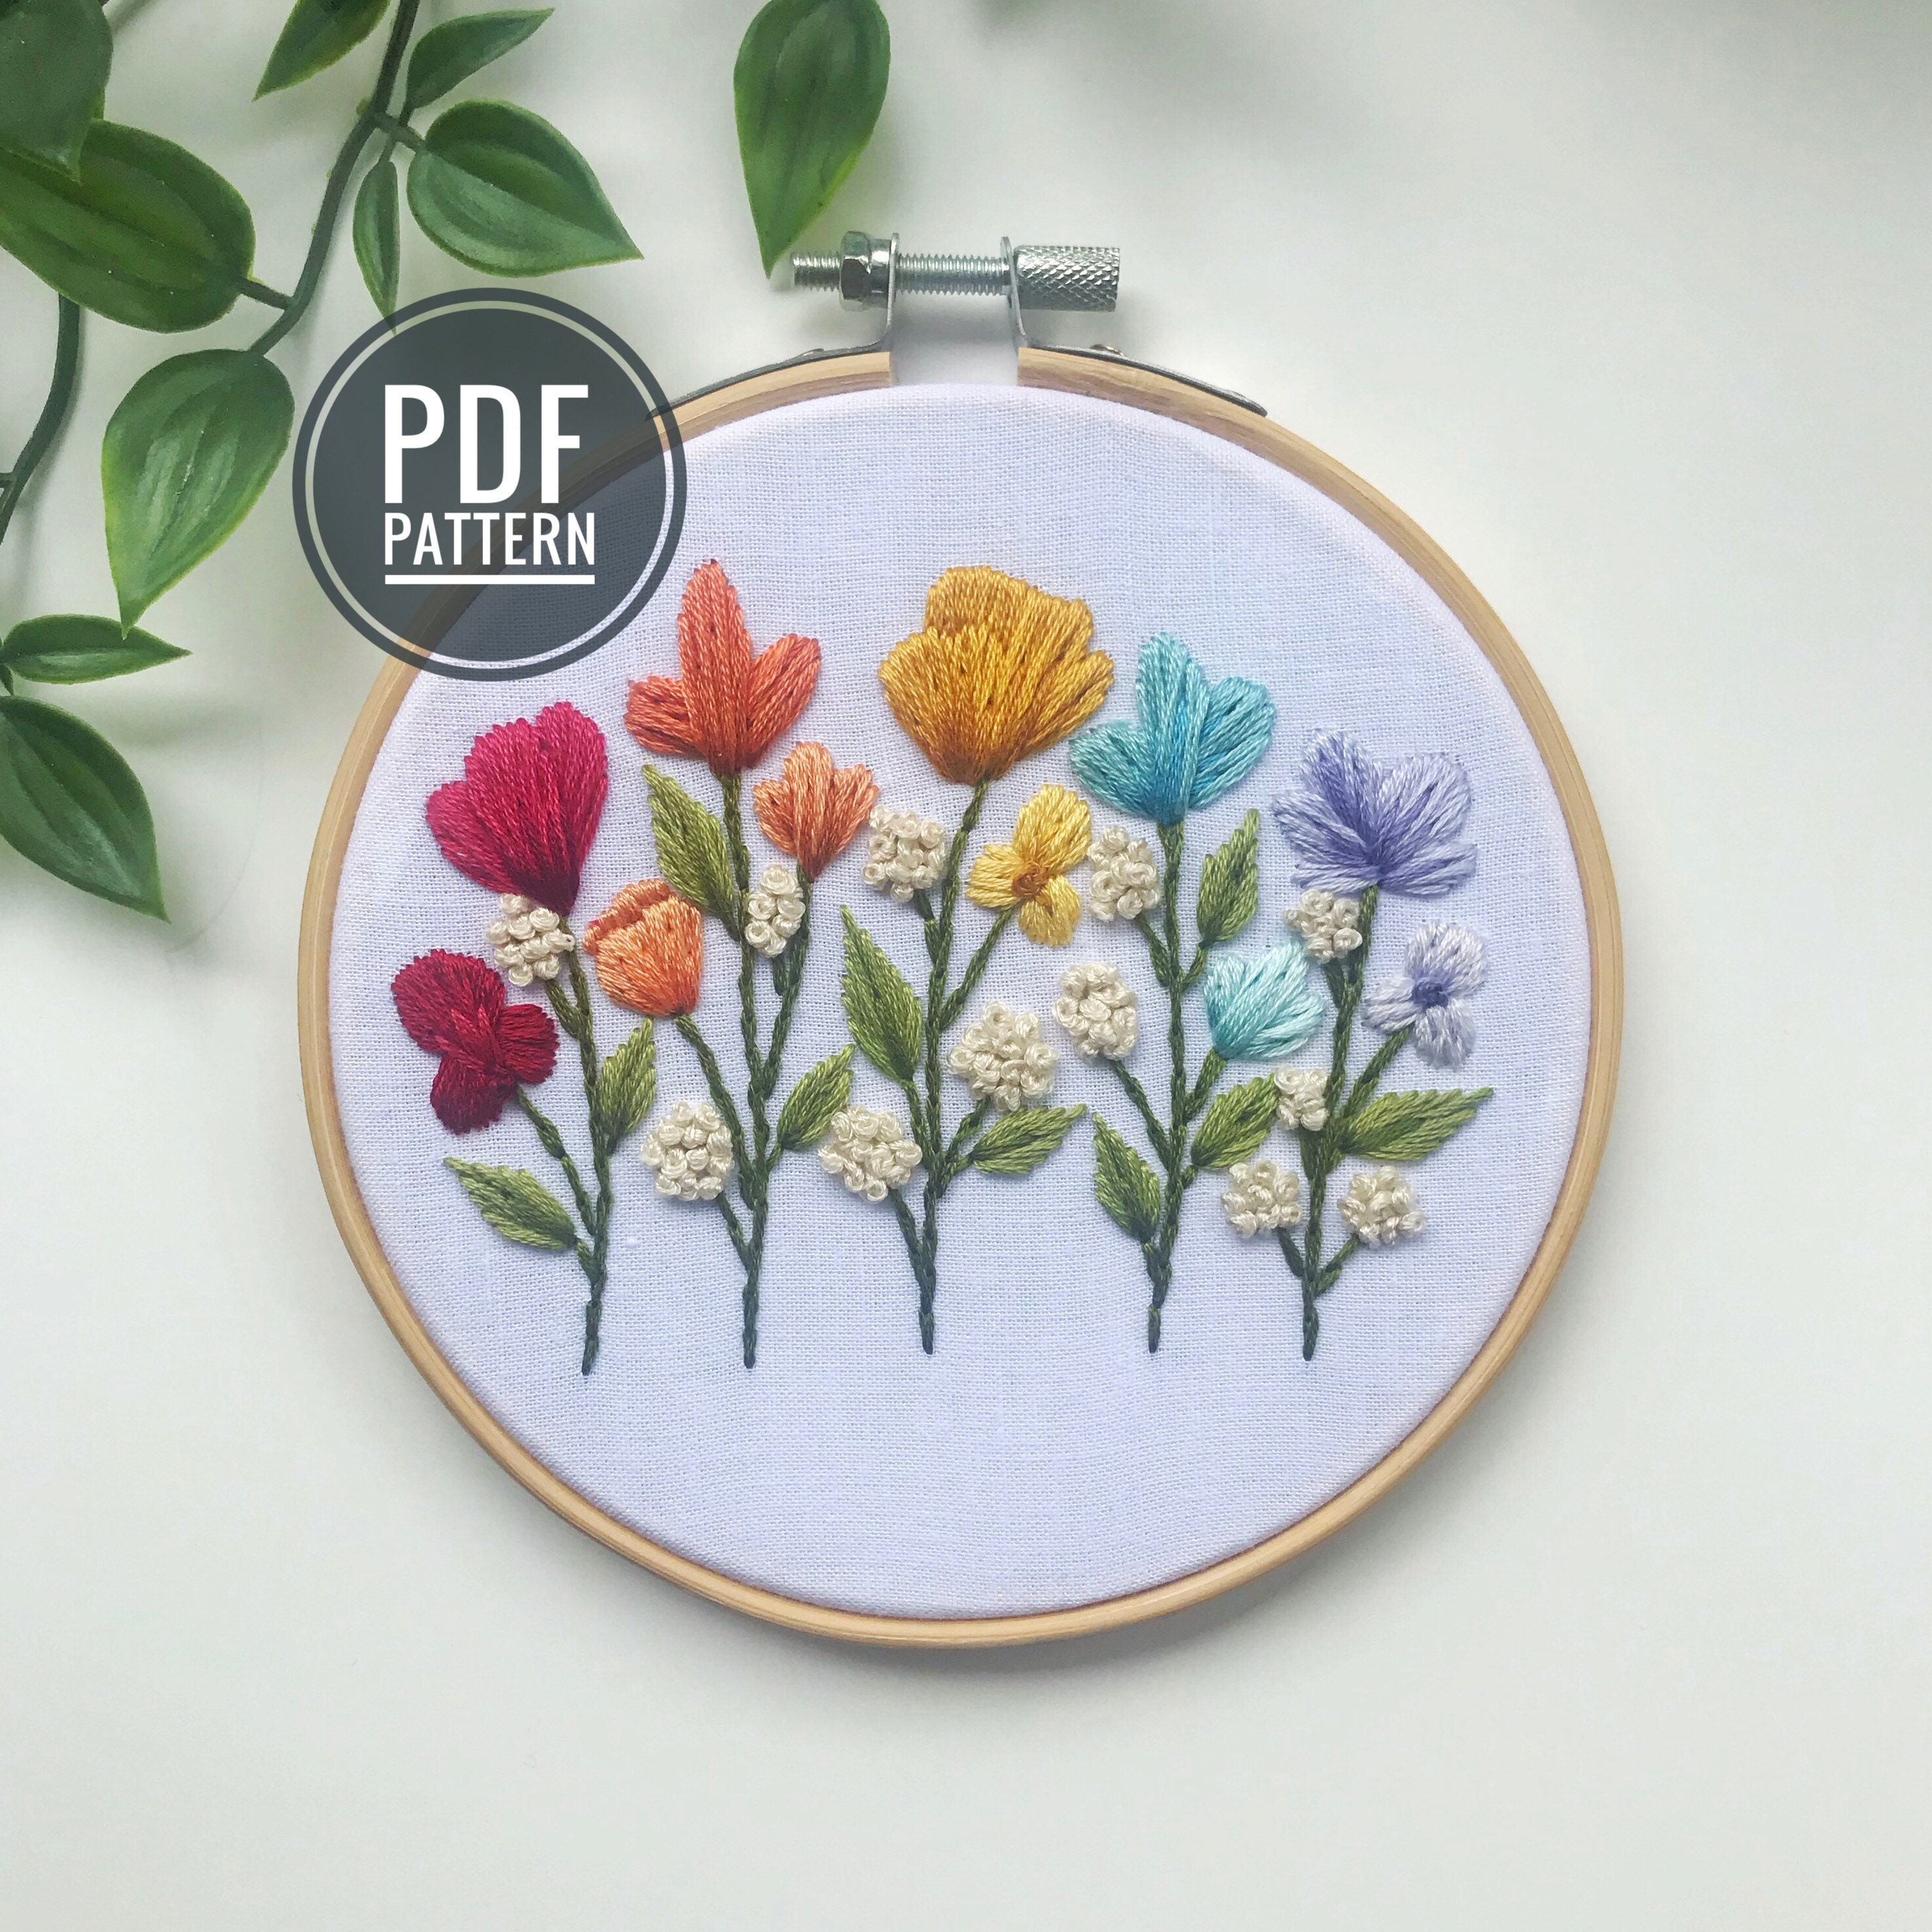 PDF PATTERN Rainbow Posies Beginner Embroidery Pattern